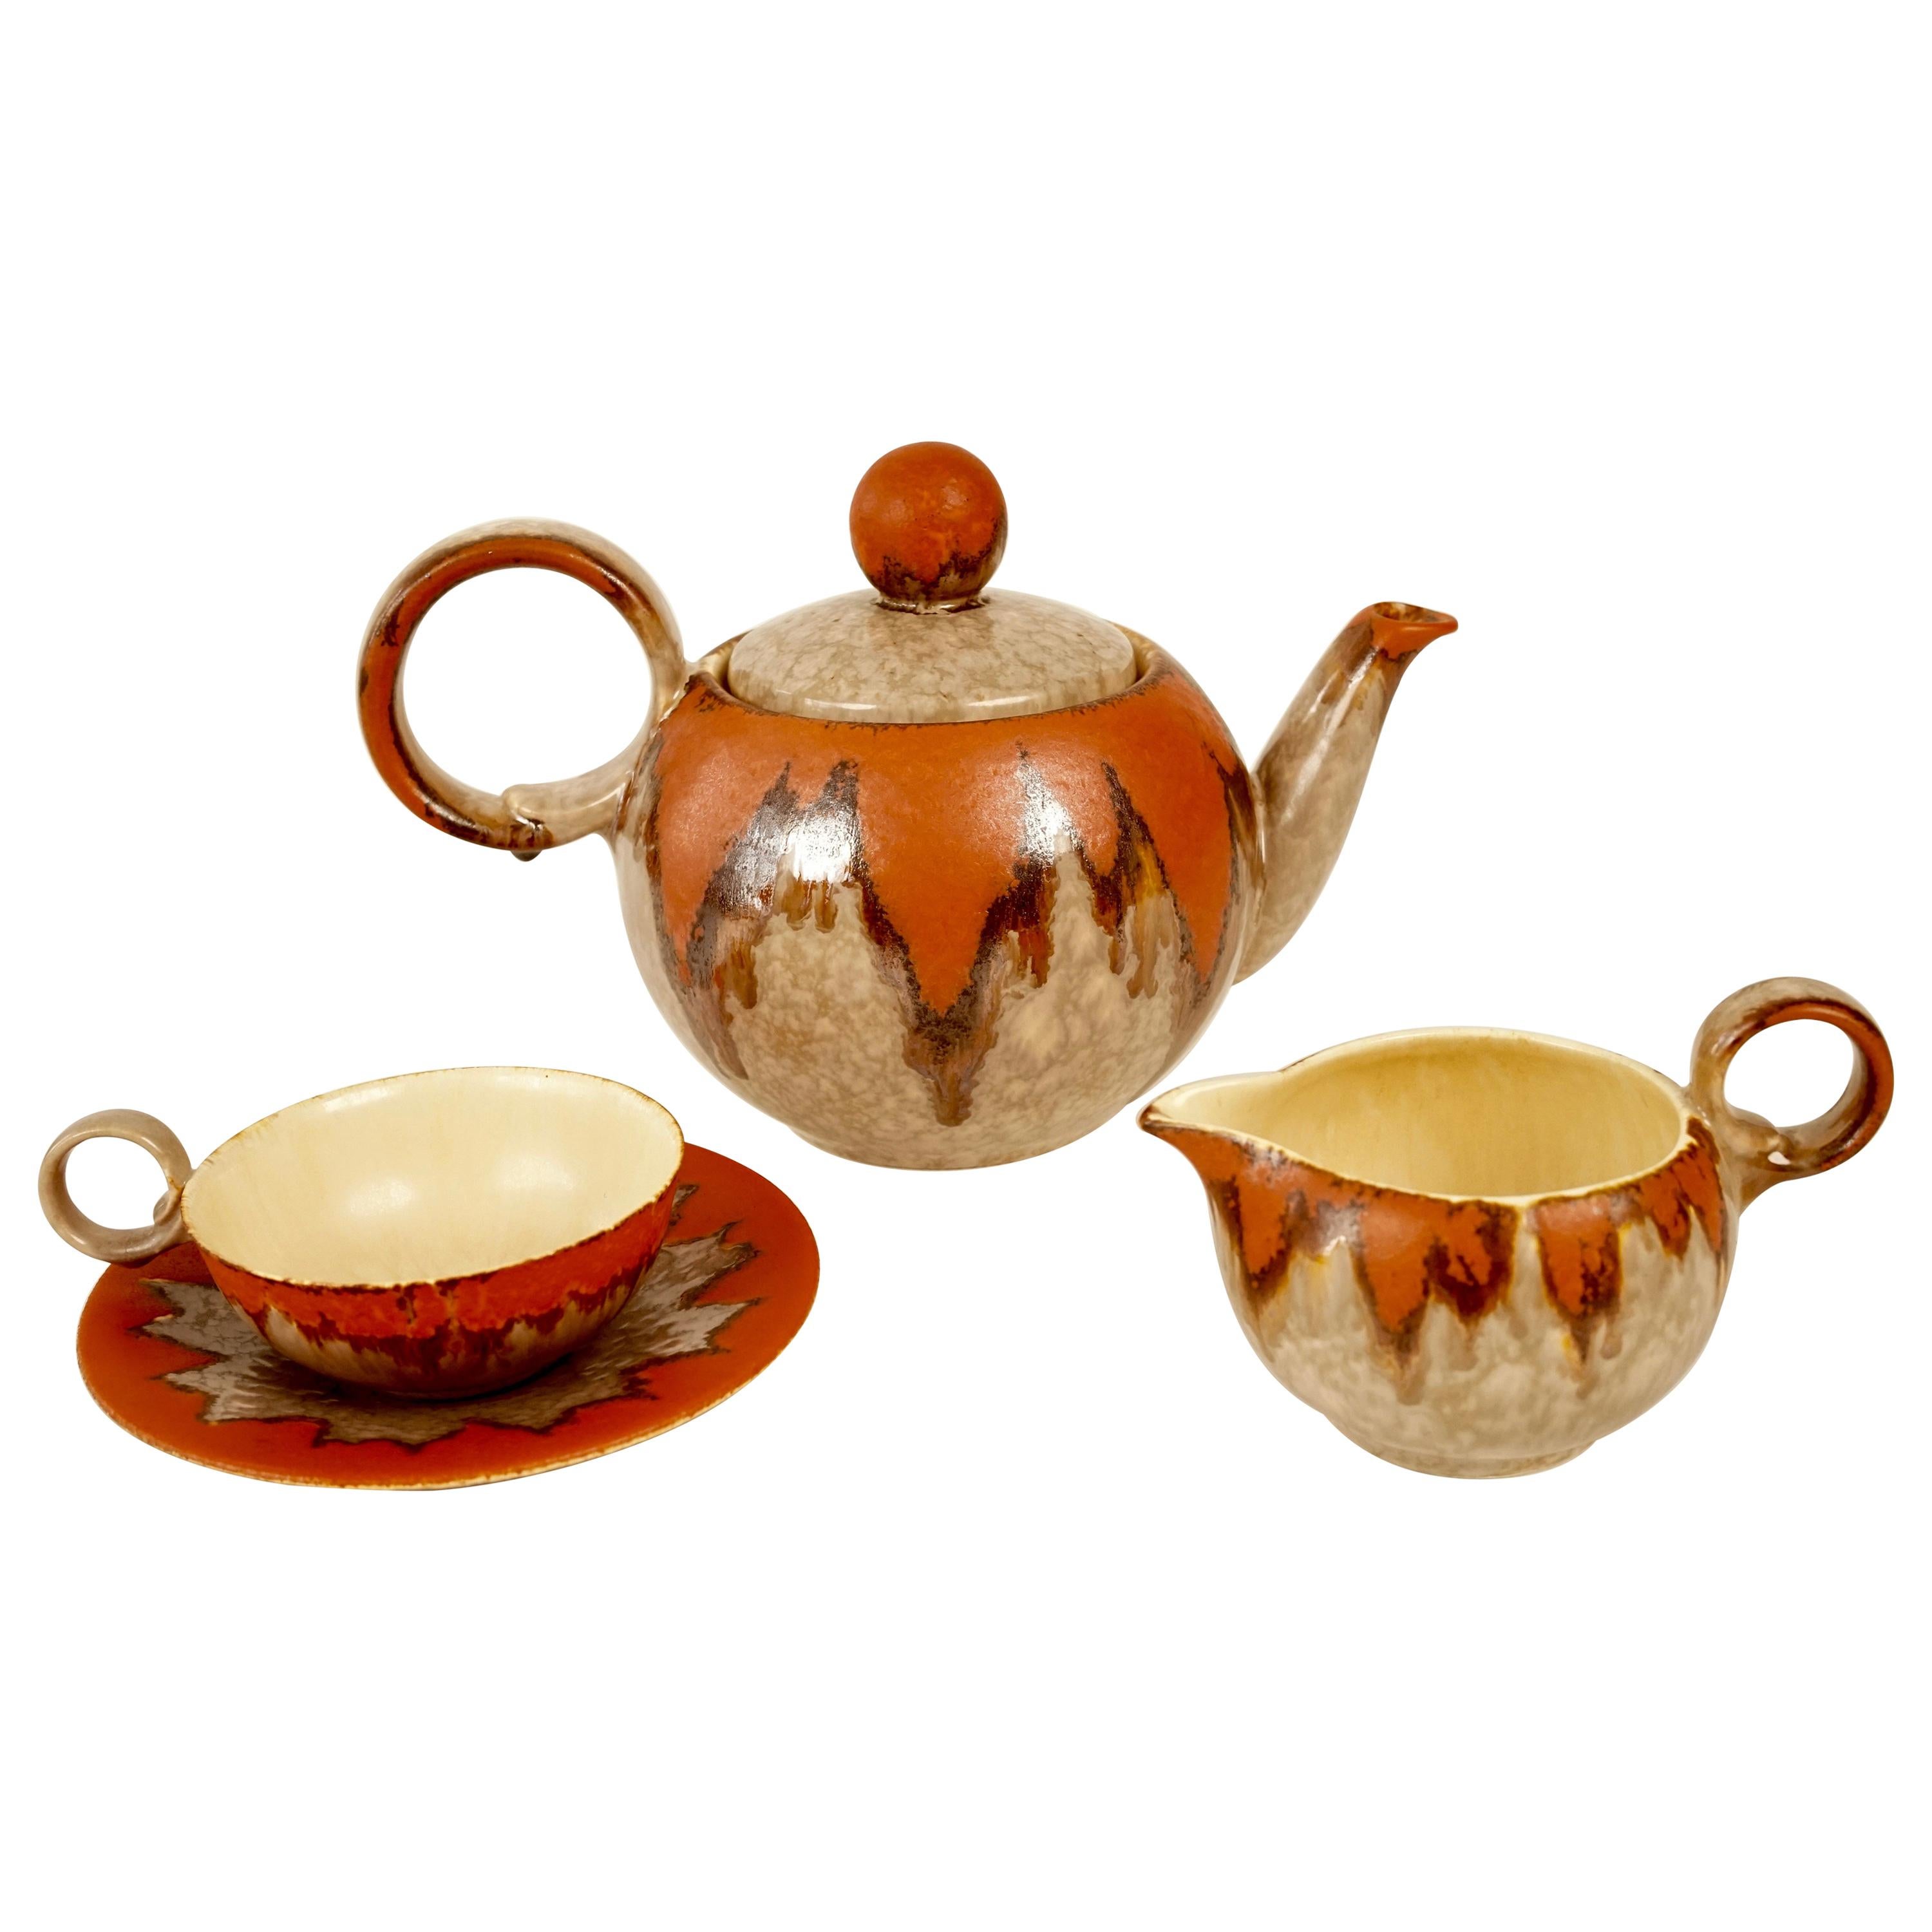 Ceramic Tea Set from 1930s, Czechoslovakia, in Cabana Style